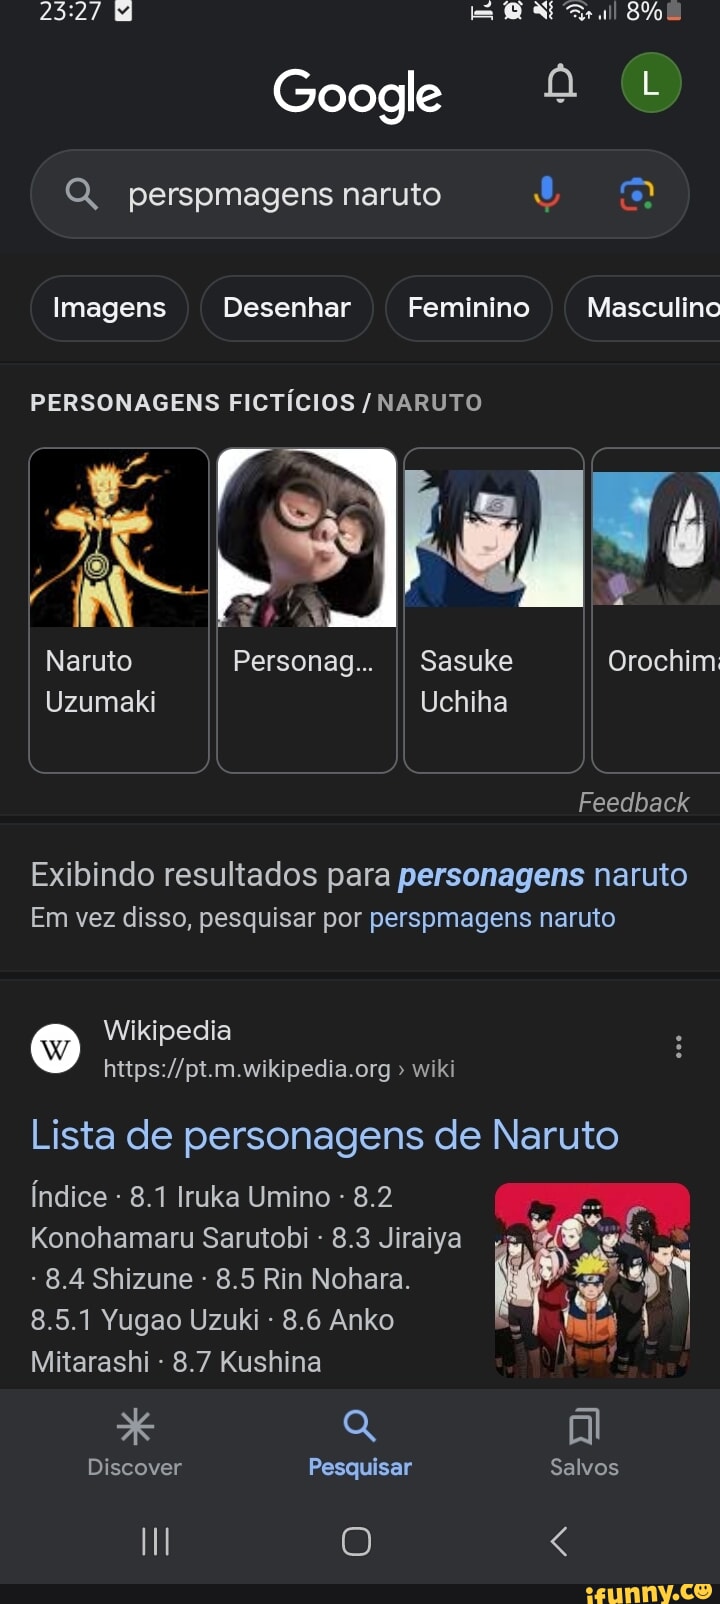 Google Q. perspmagens naruto Imagens Desenhar Feminino Masculino  PERSONAGENS FICTÍCIOS / NARUTO Sago Naruto Persona, I Sasuke